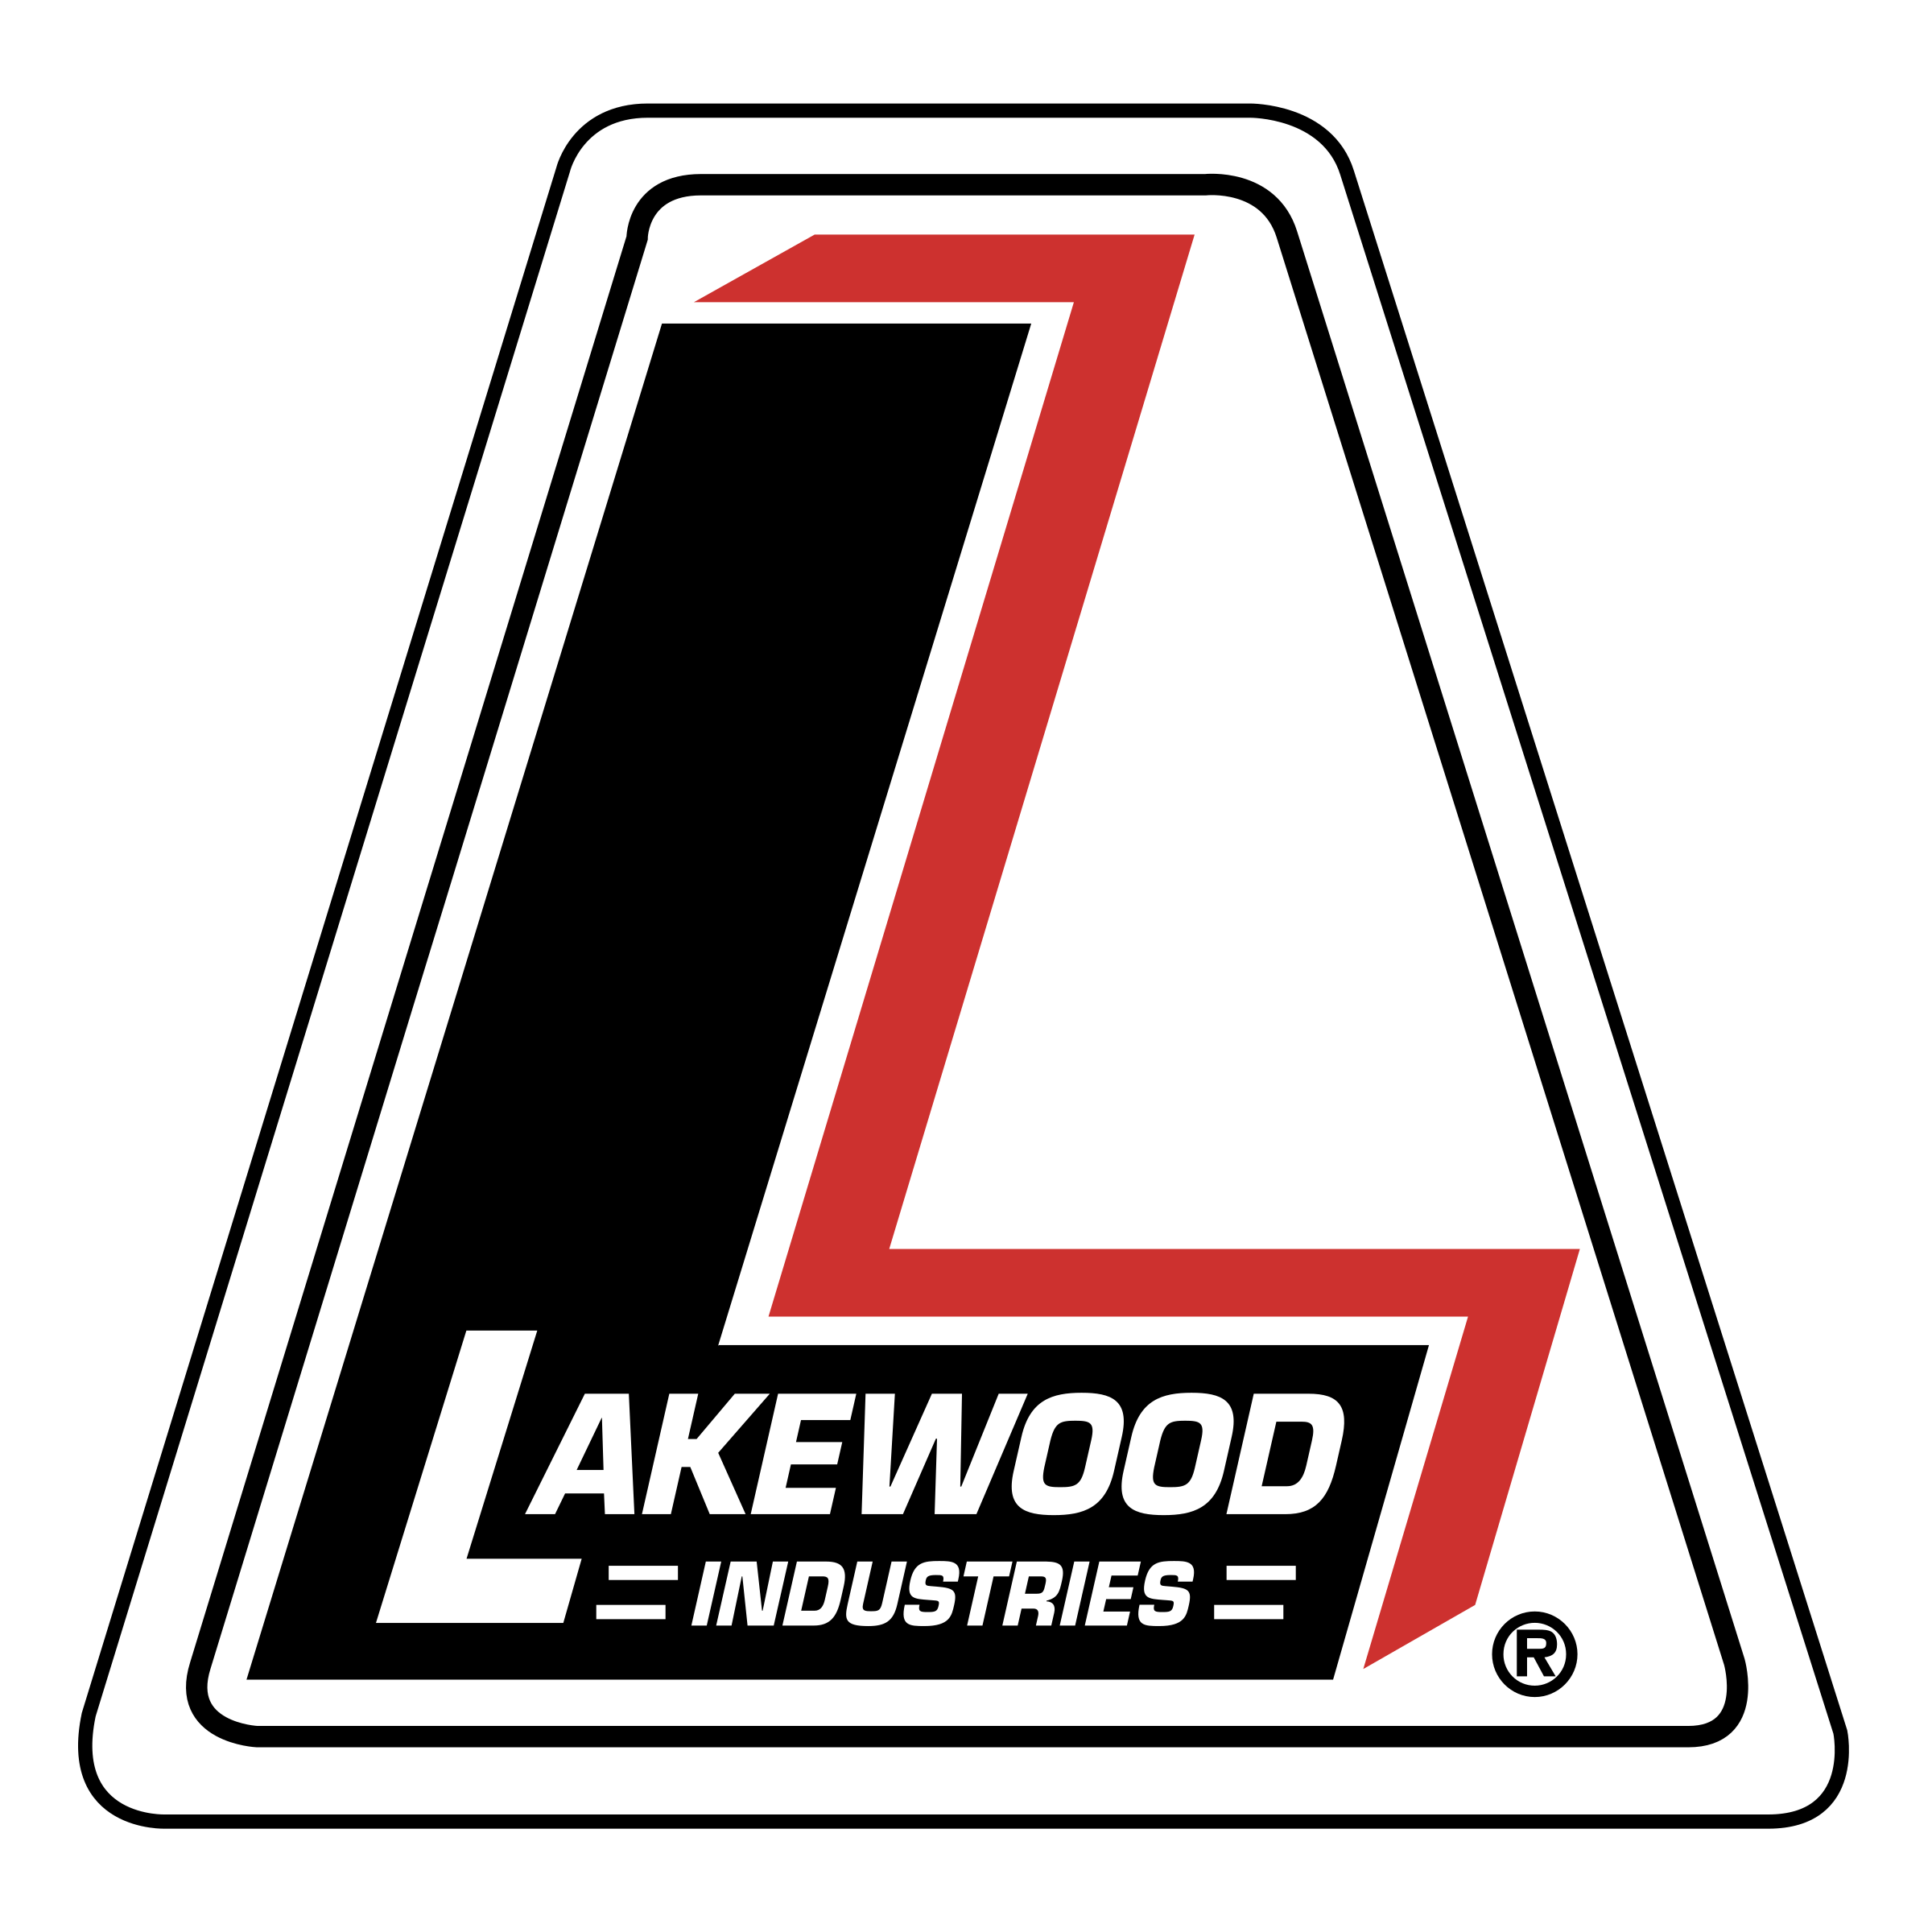 Lakewood Logo - Lakewood Industries Logo PNG Transparent & SVG Vector - Freebie Supply